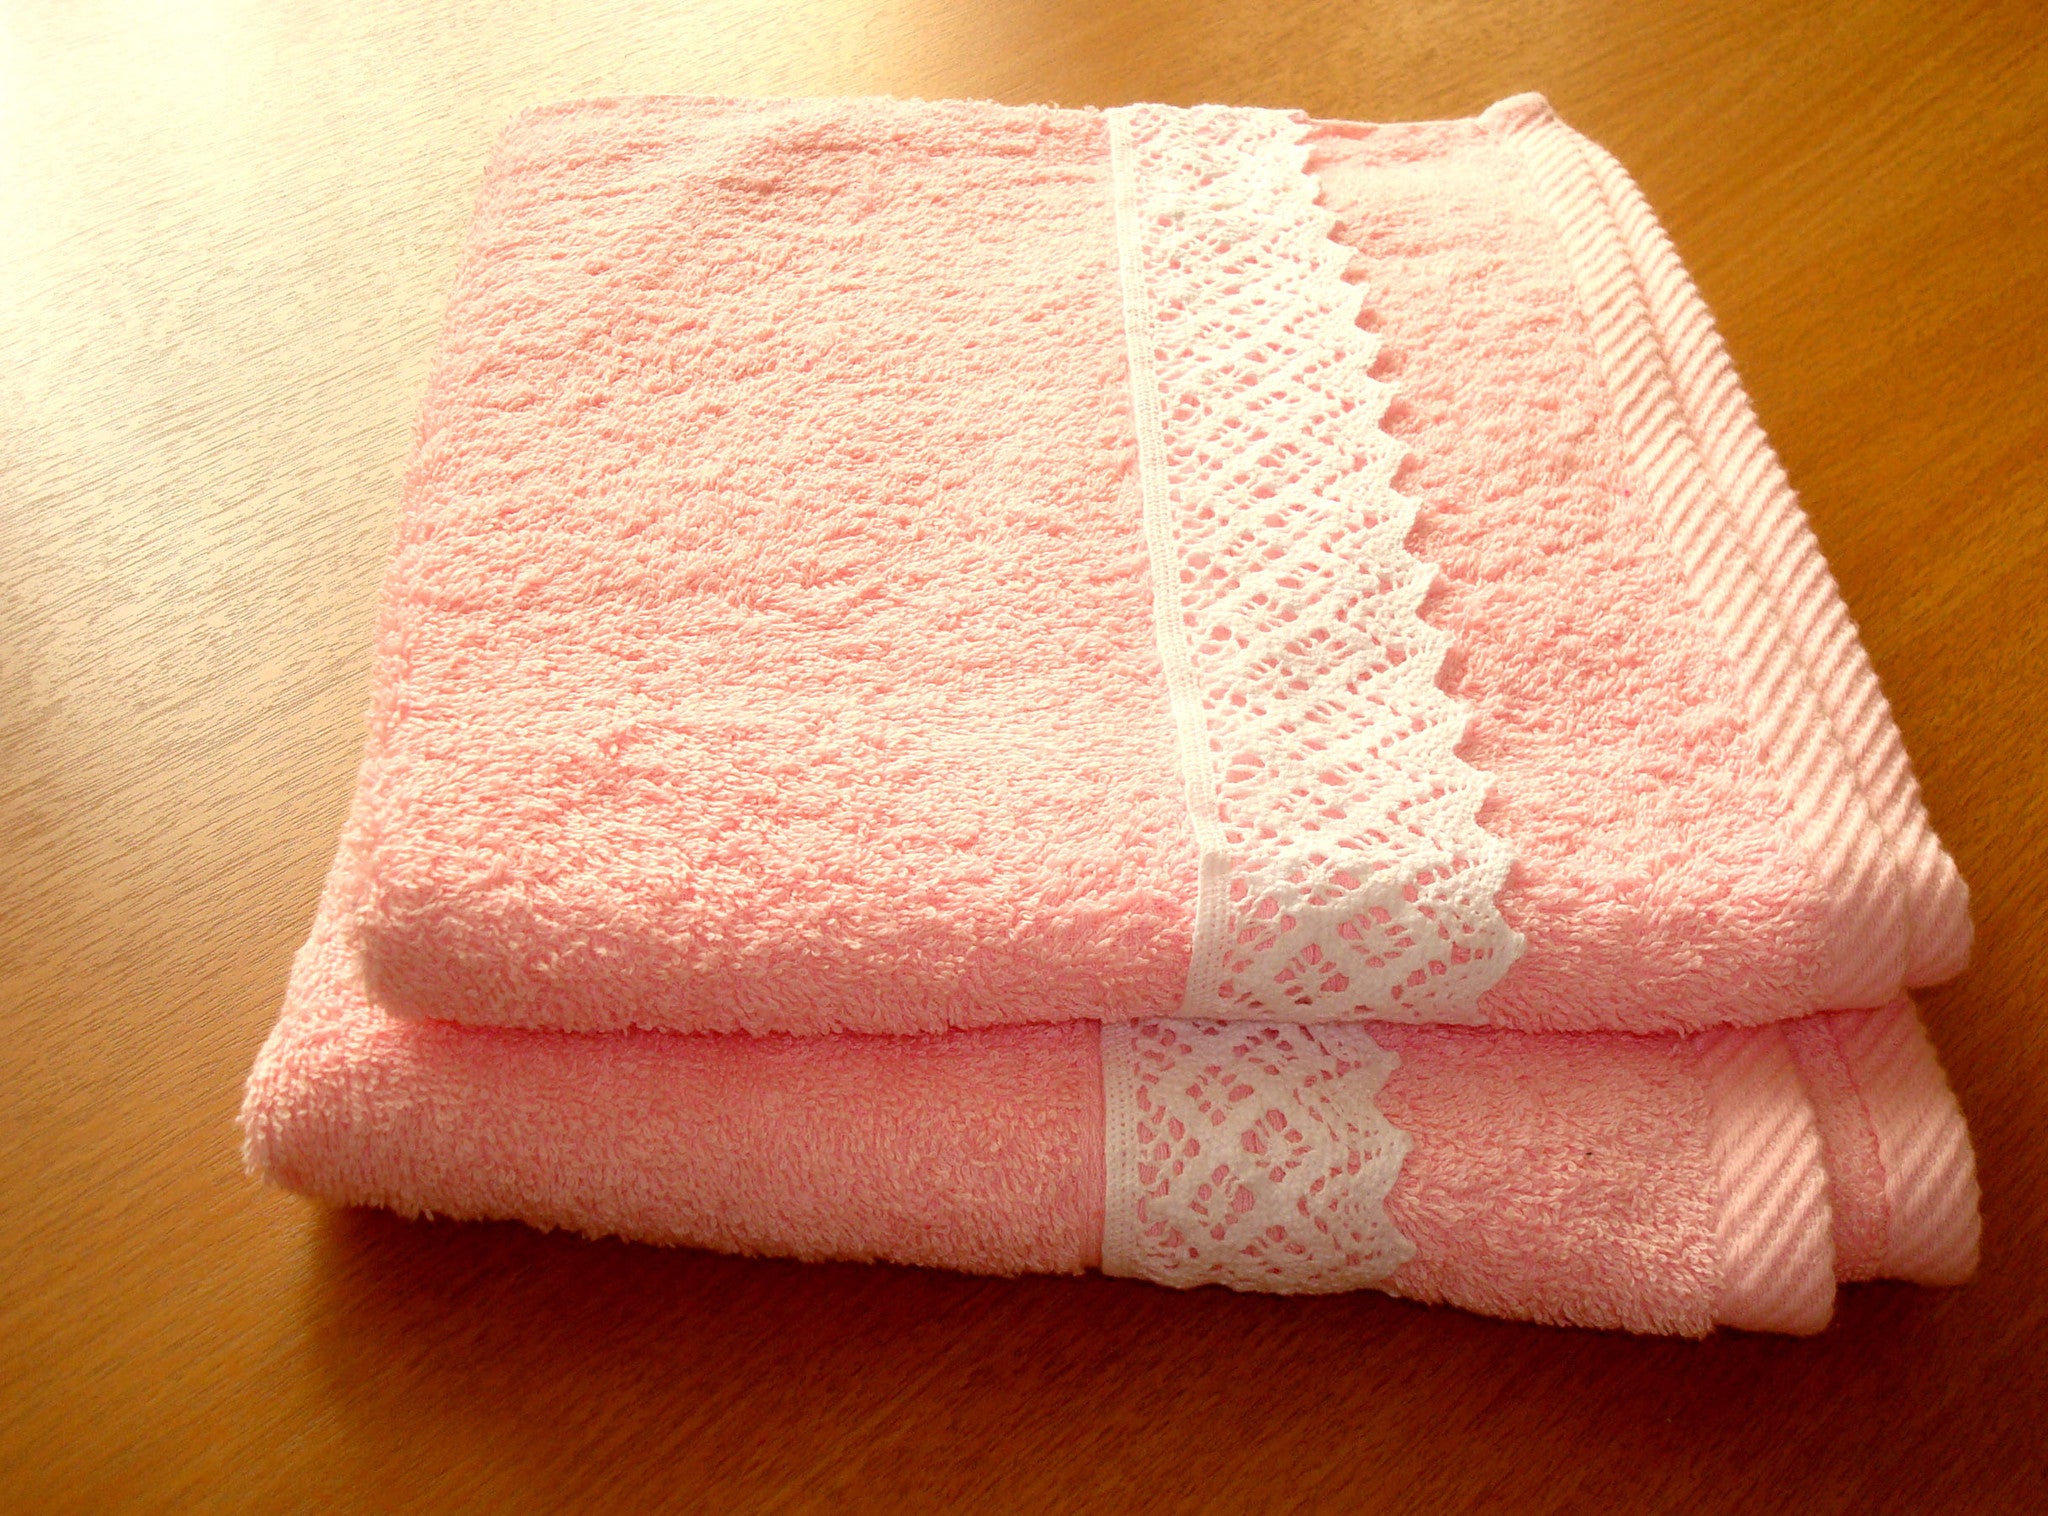 Triangular Edge Lace on Light Pink Towel|منشفة زهرية ذات دانتيل كروشه مسنن